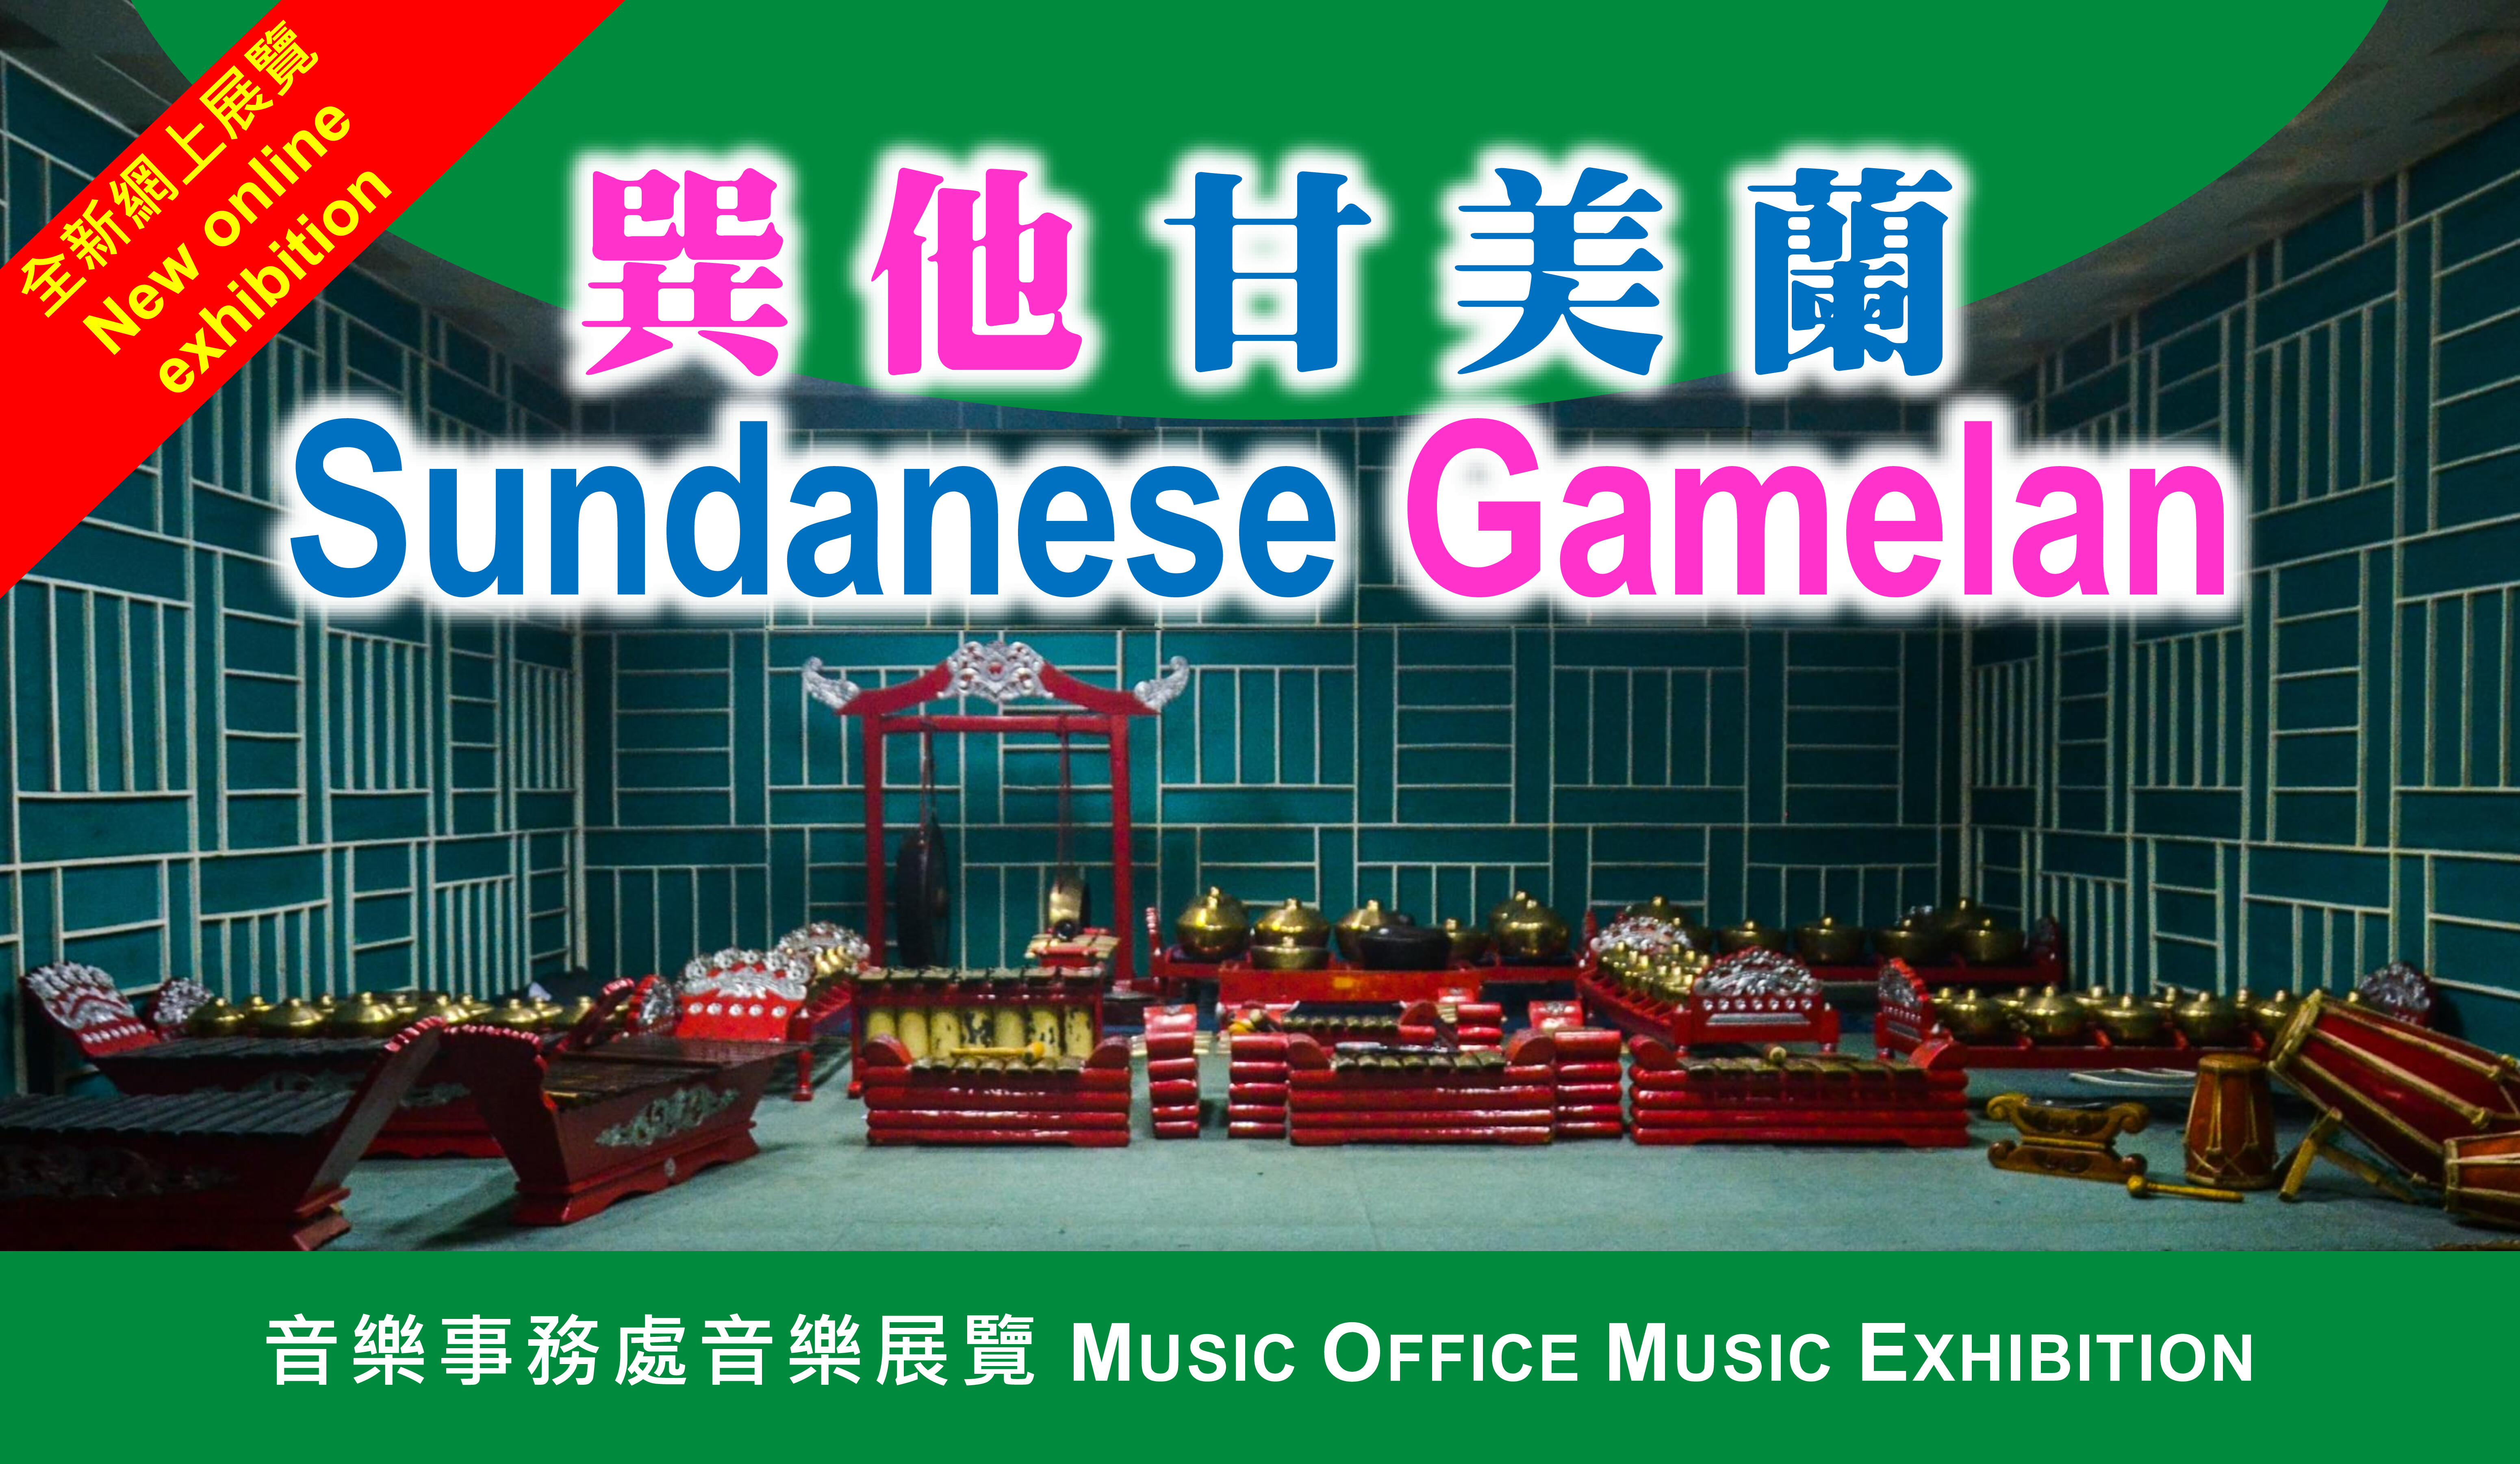 Music Exhibition - Sundanese Gamelan